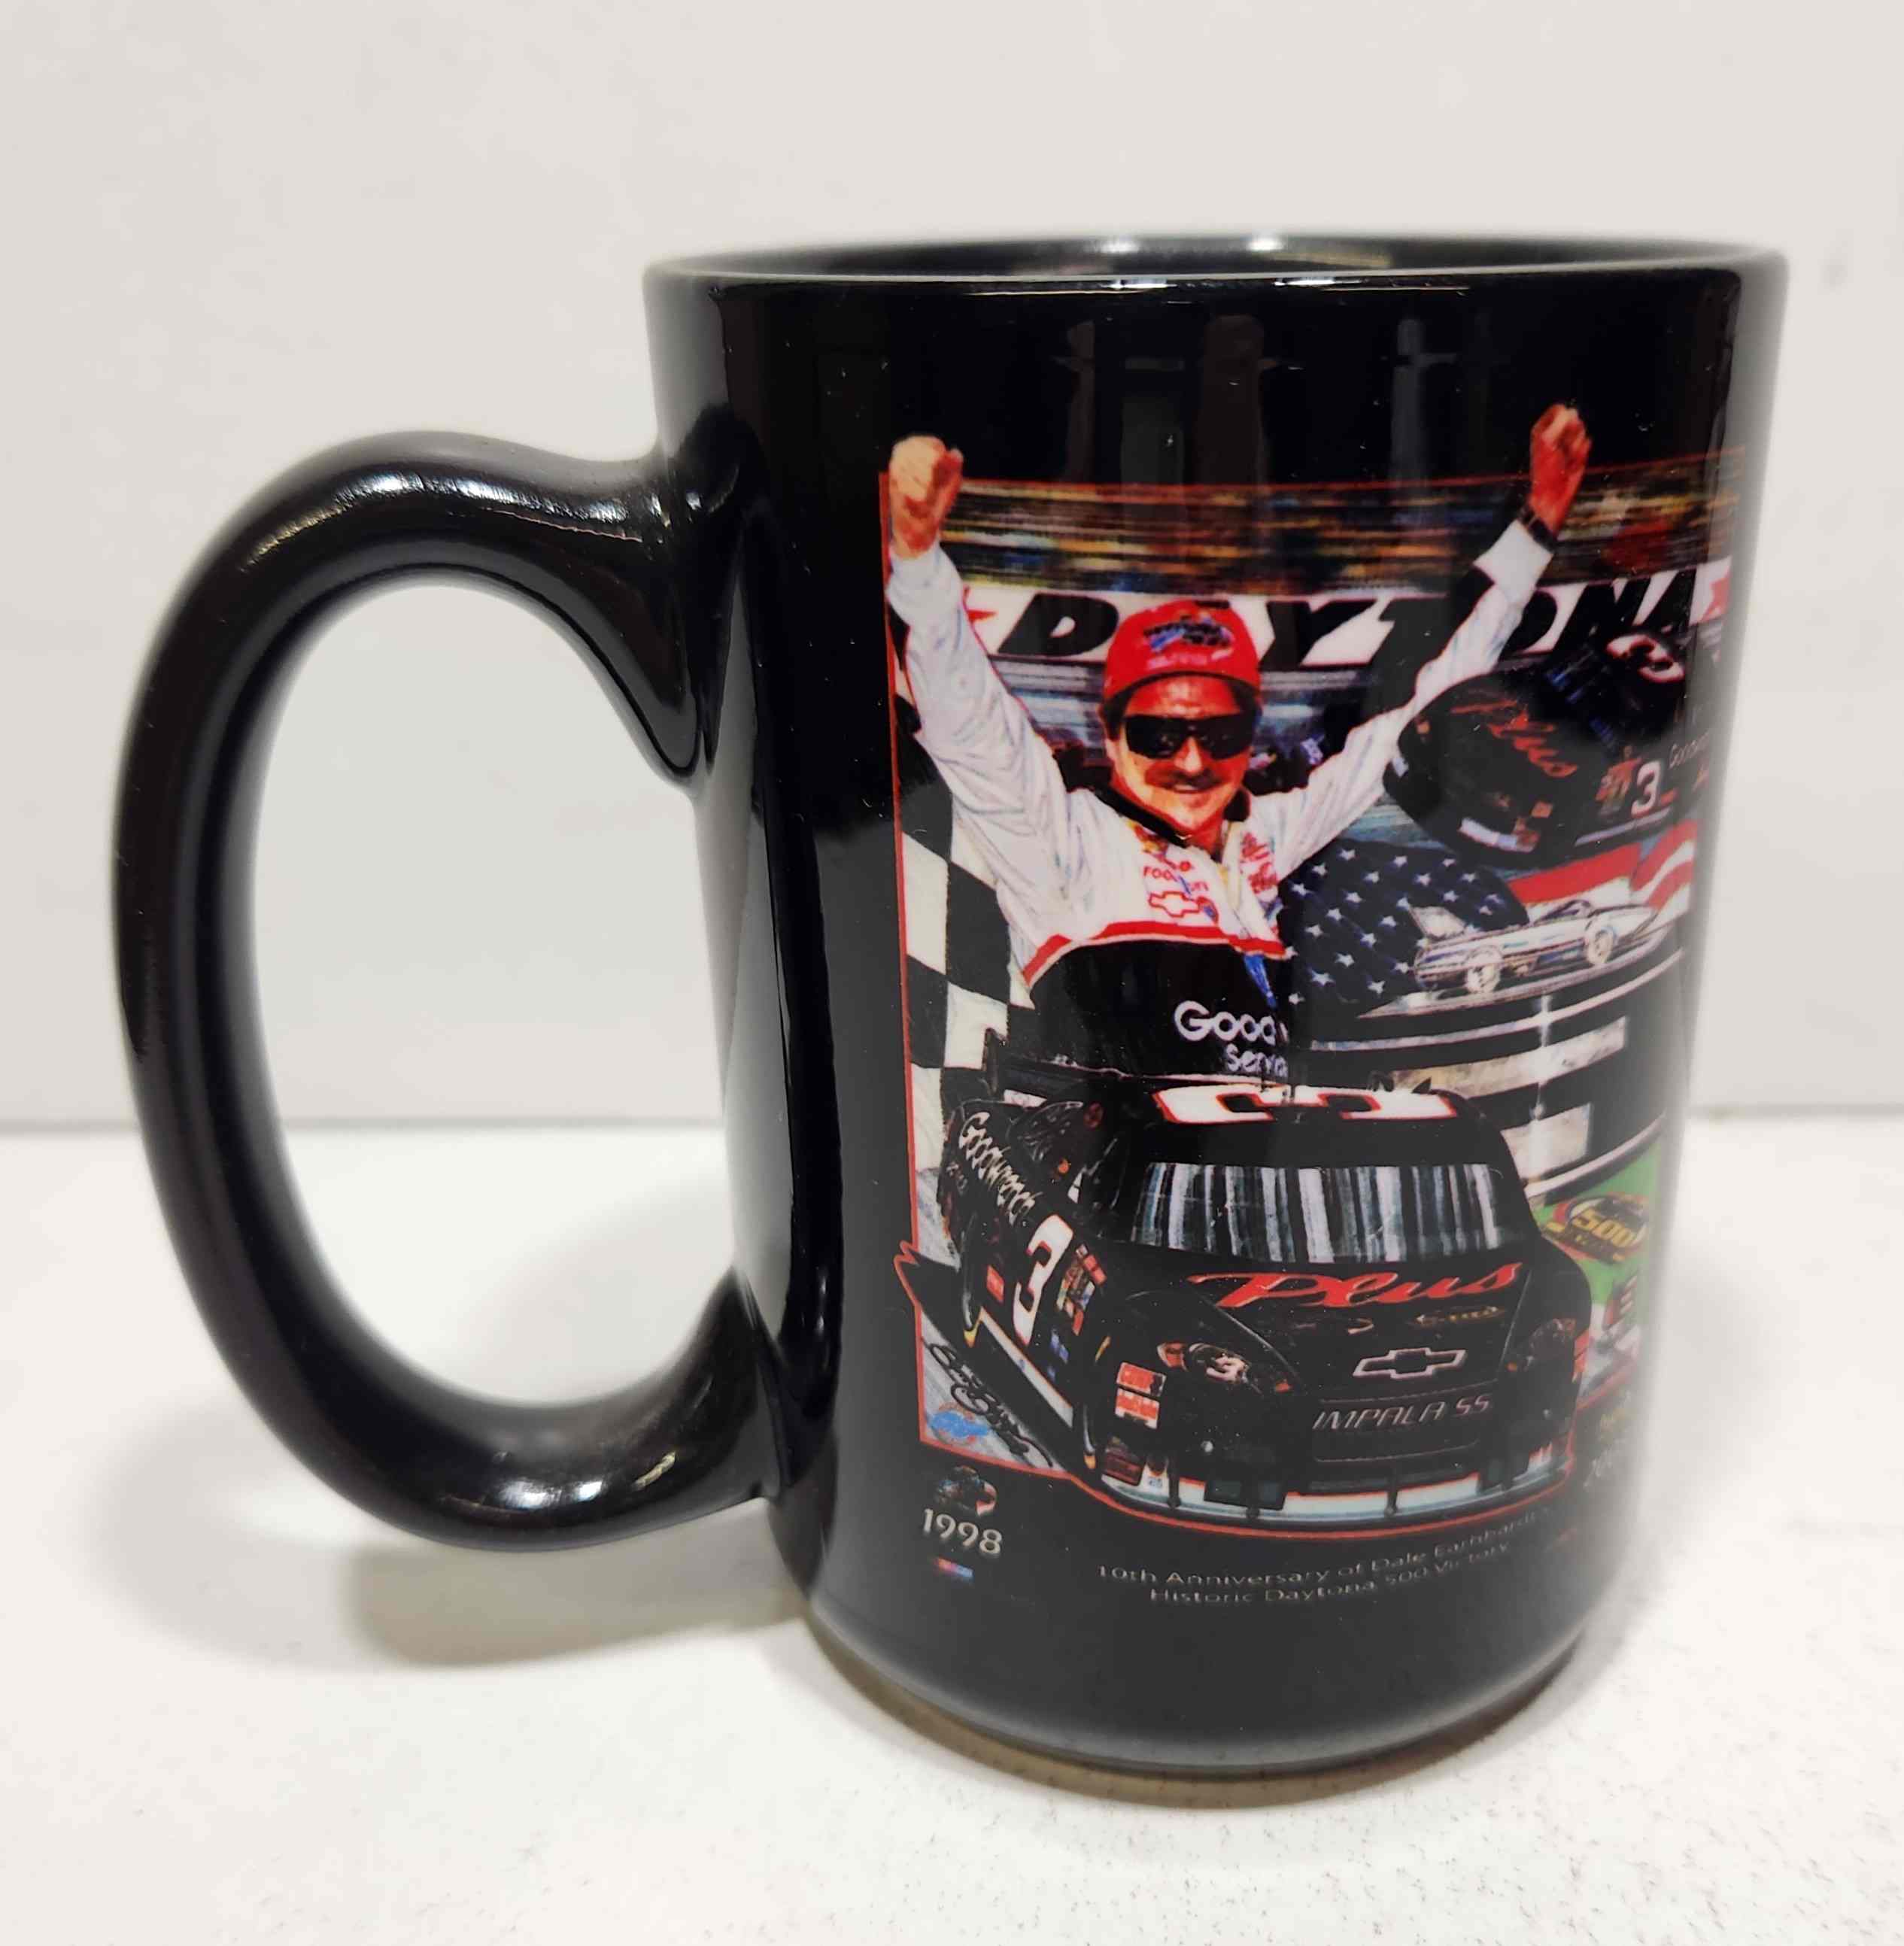 1998 Dale Earnhardt "Daytona 500 Win" Collectors Mug